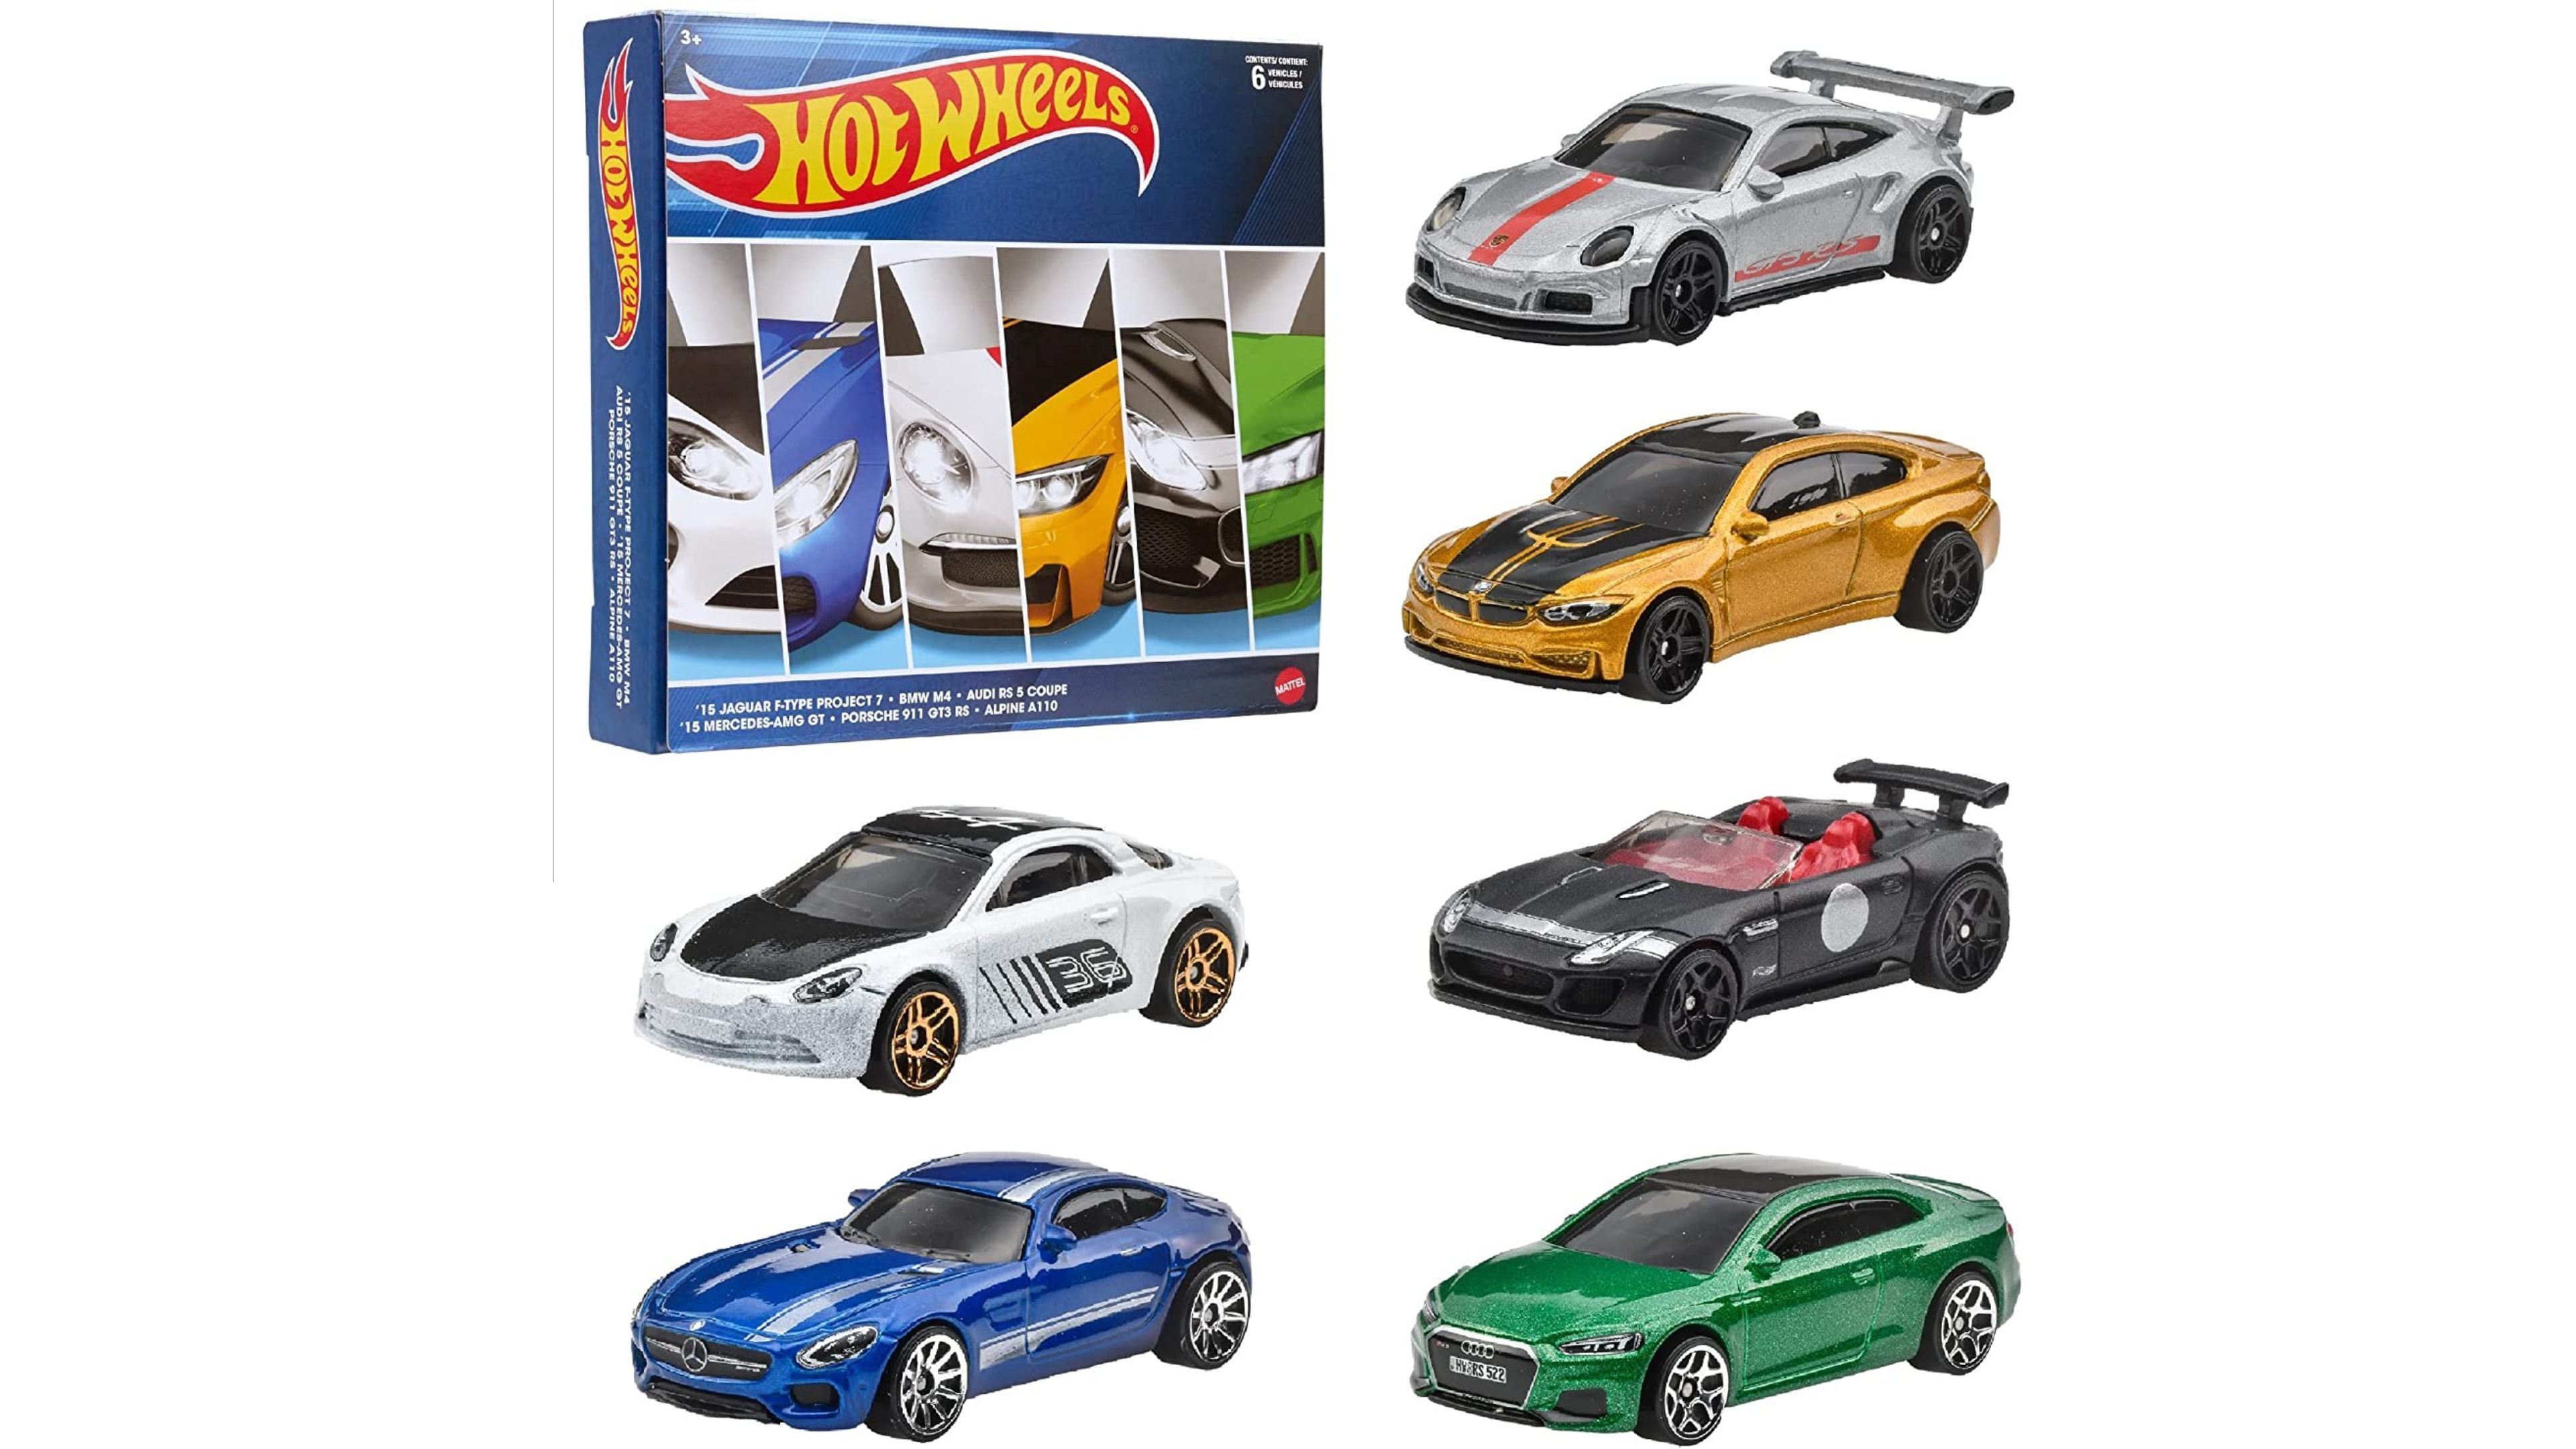 Sets de coches clásicos de juguete